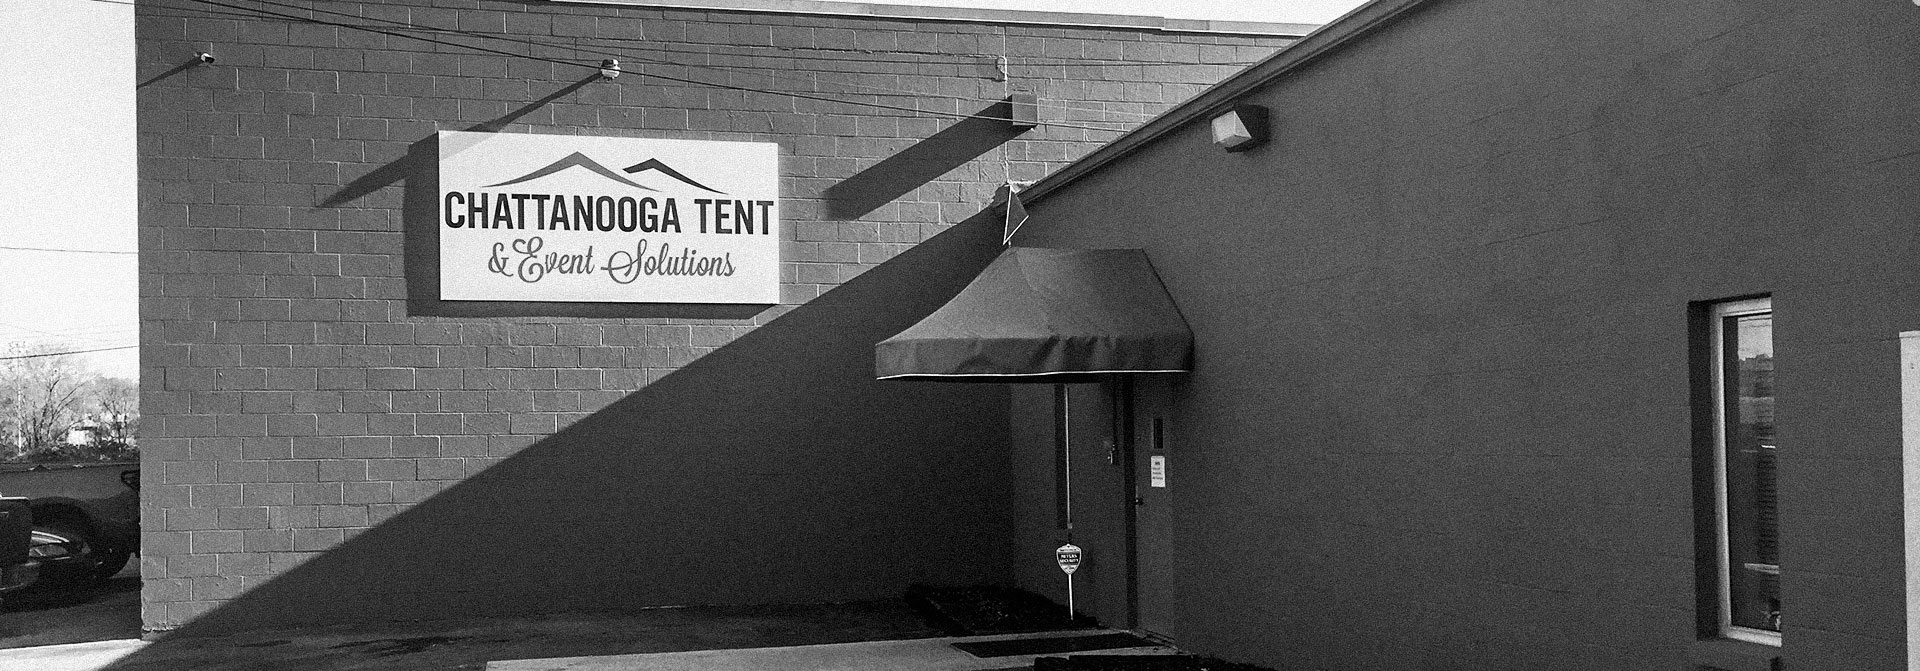 Original Chattanooga Tent & event solutions building